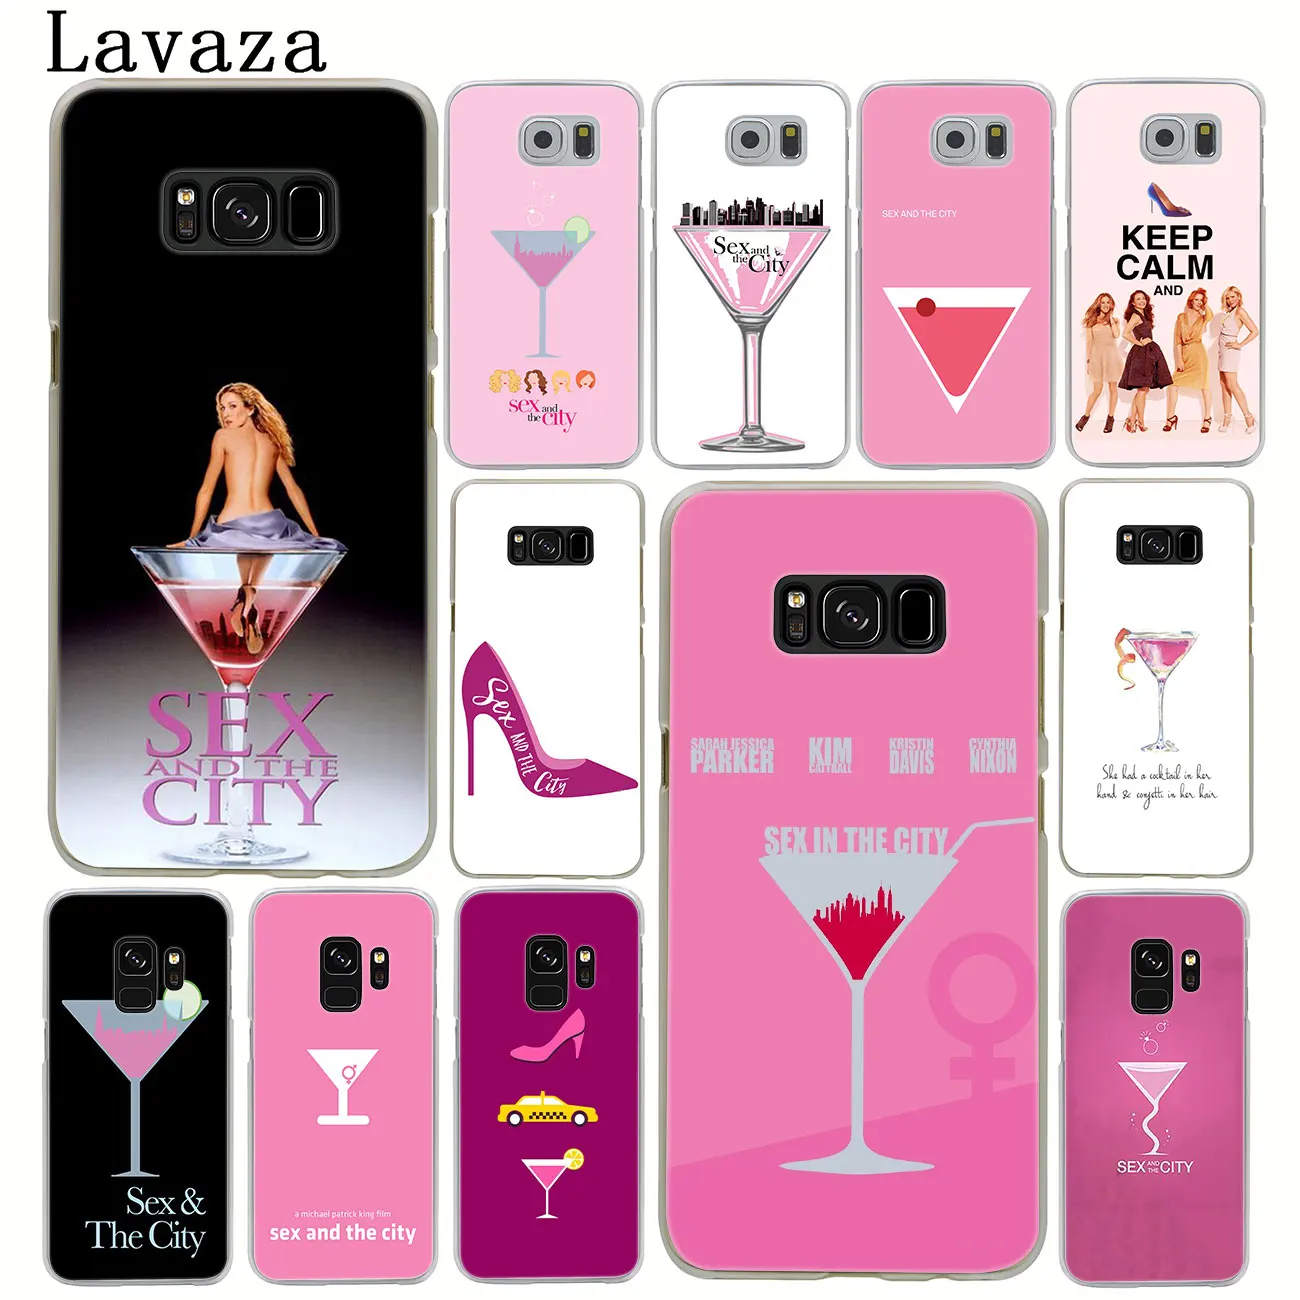 

Lavaza sex in the city kiss Hard Phone Case for Samsung Galaxy S10 S10E S8 Plus S6 S7 Edge S9 Plus Cover